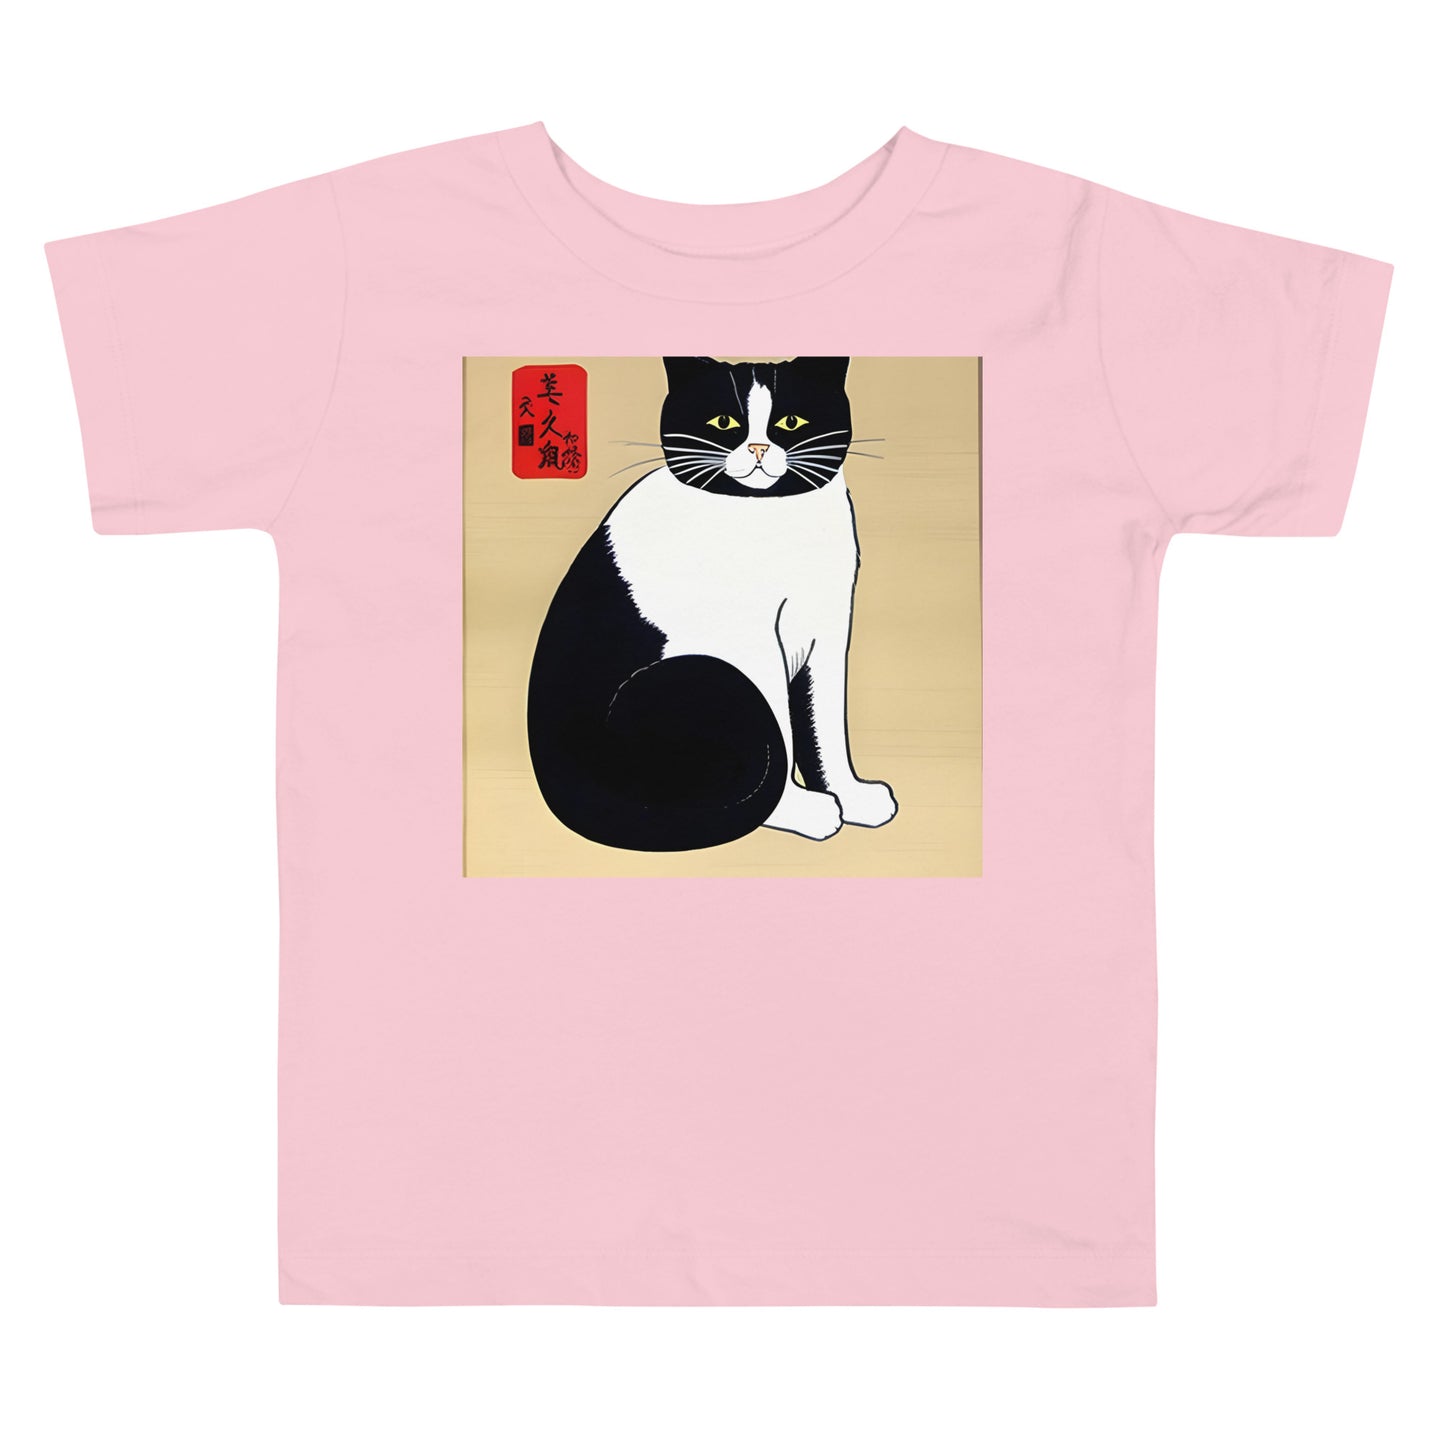 Meowsome Toddler's T-Shirt - 026